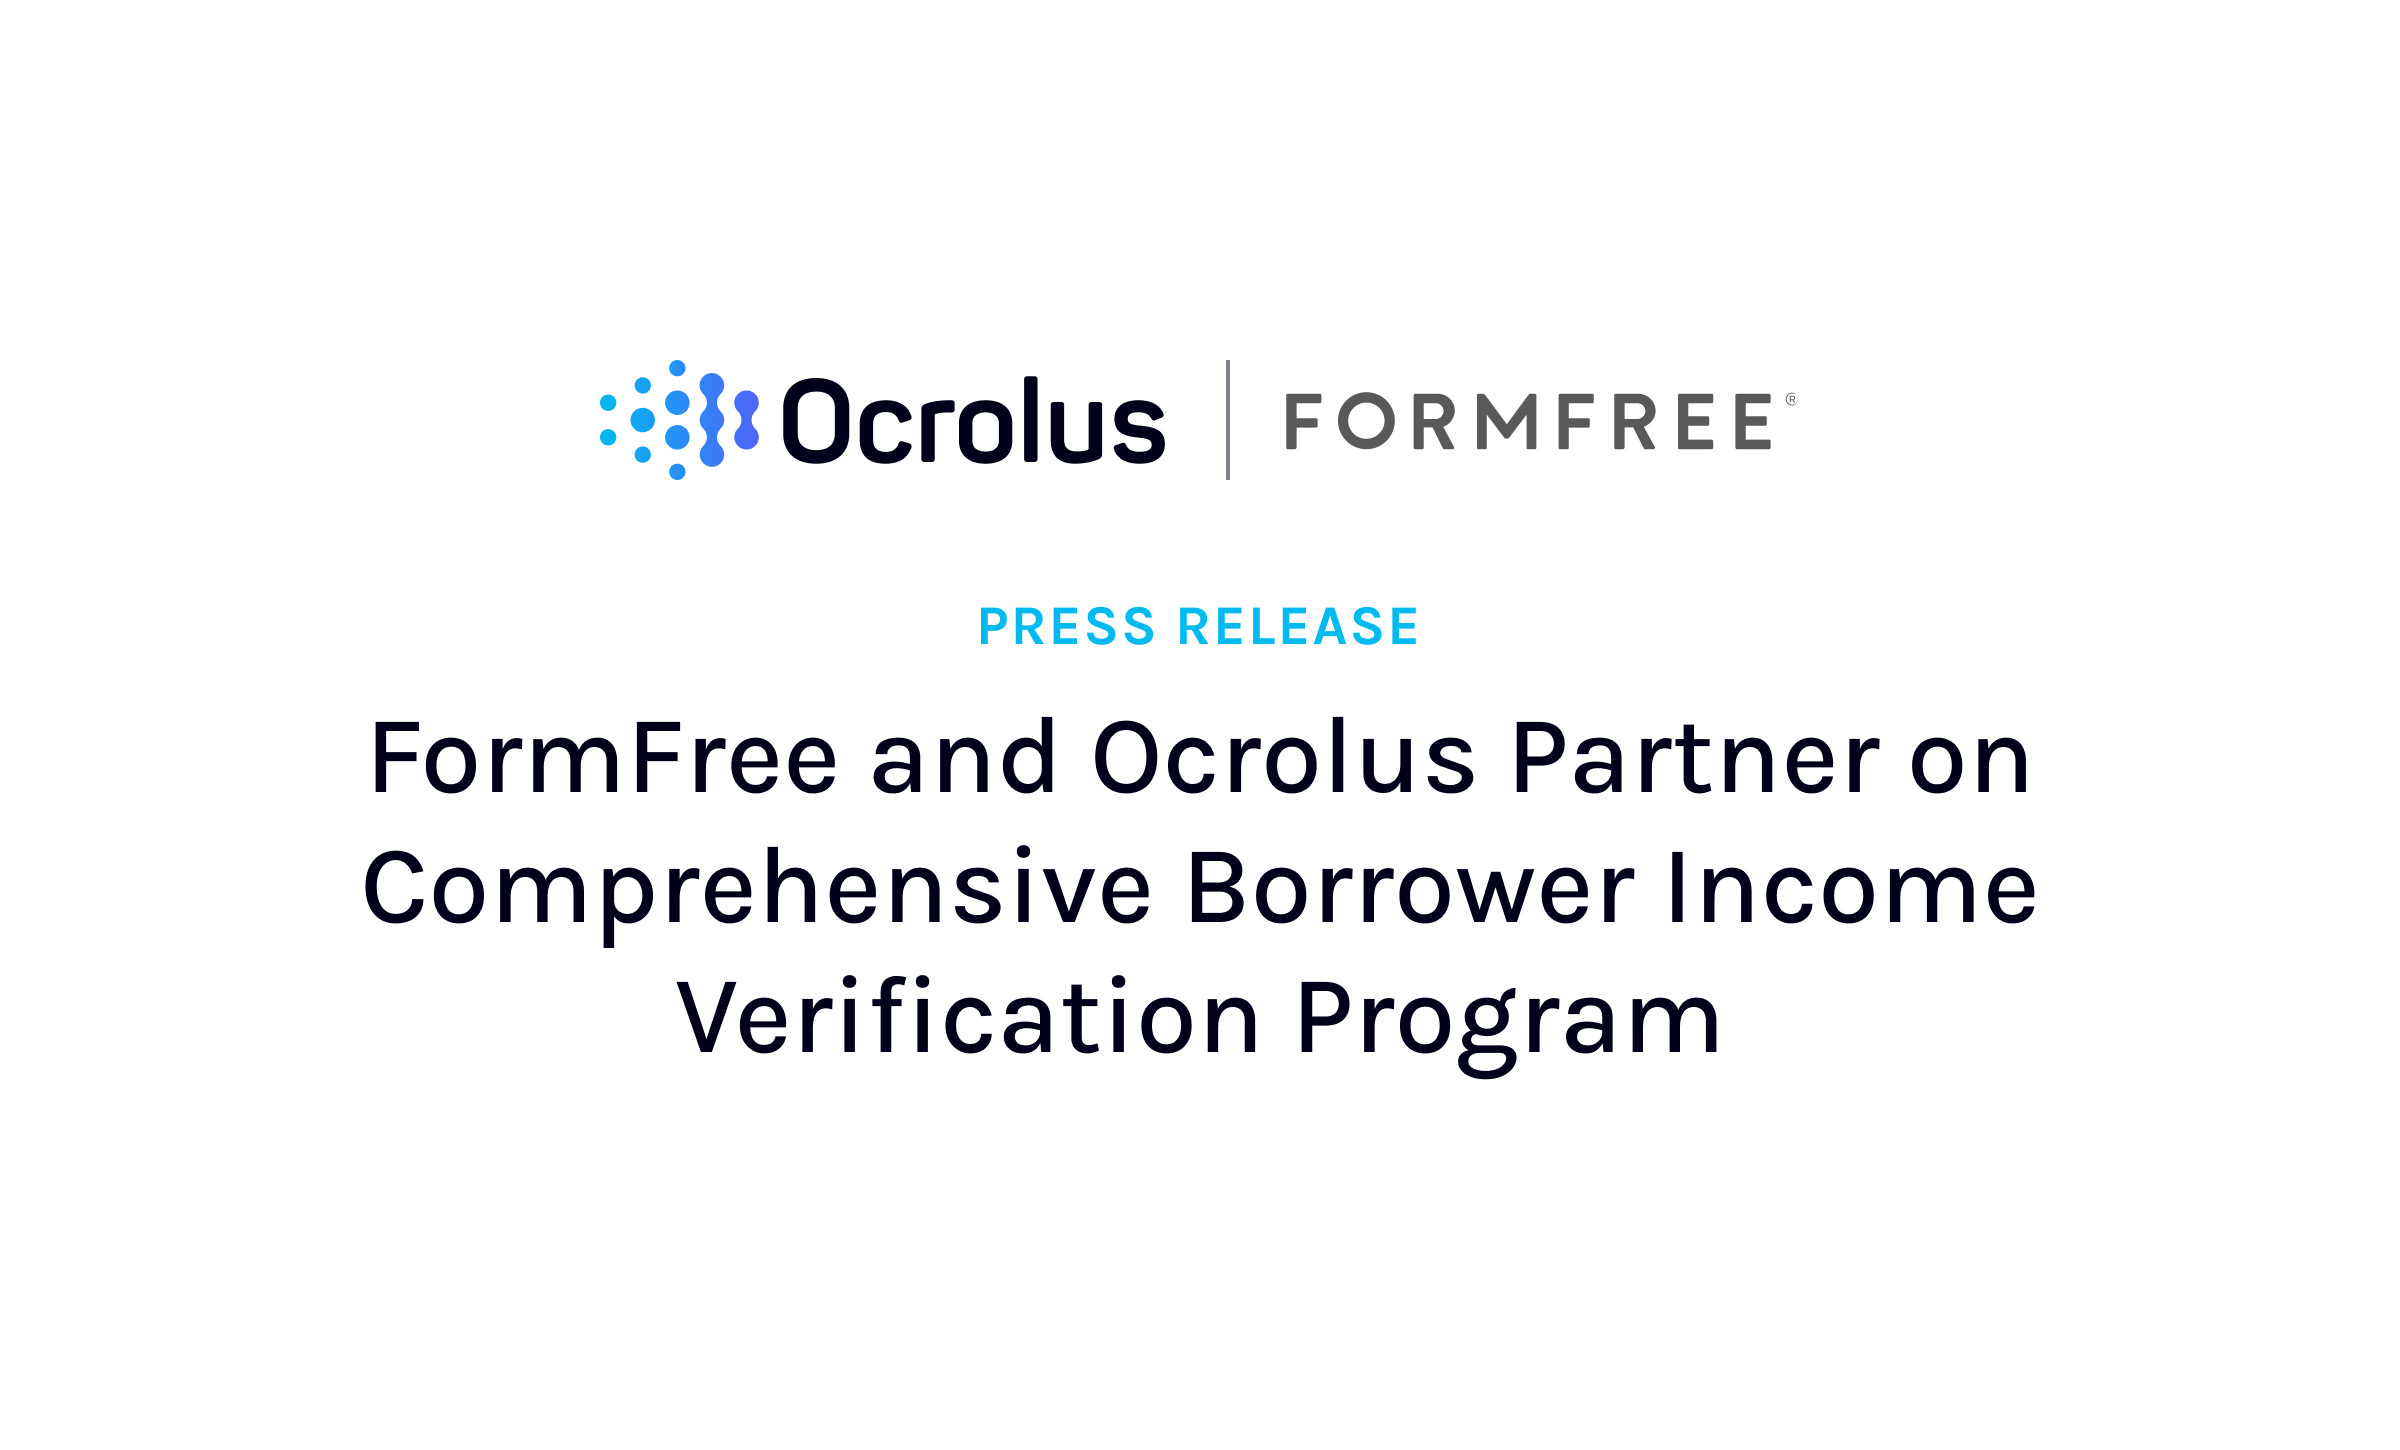 Formfree and ocrolus partner copy